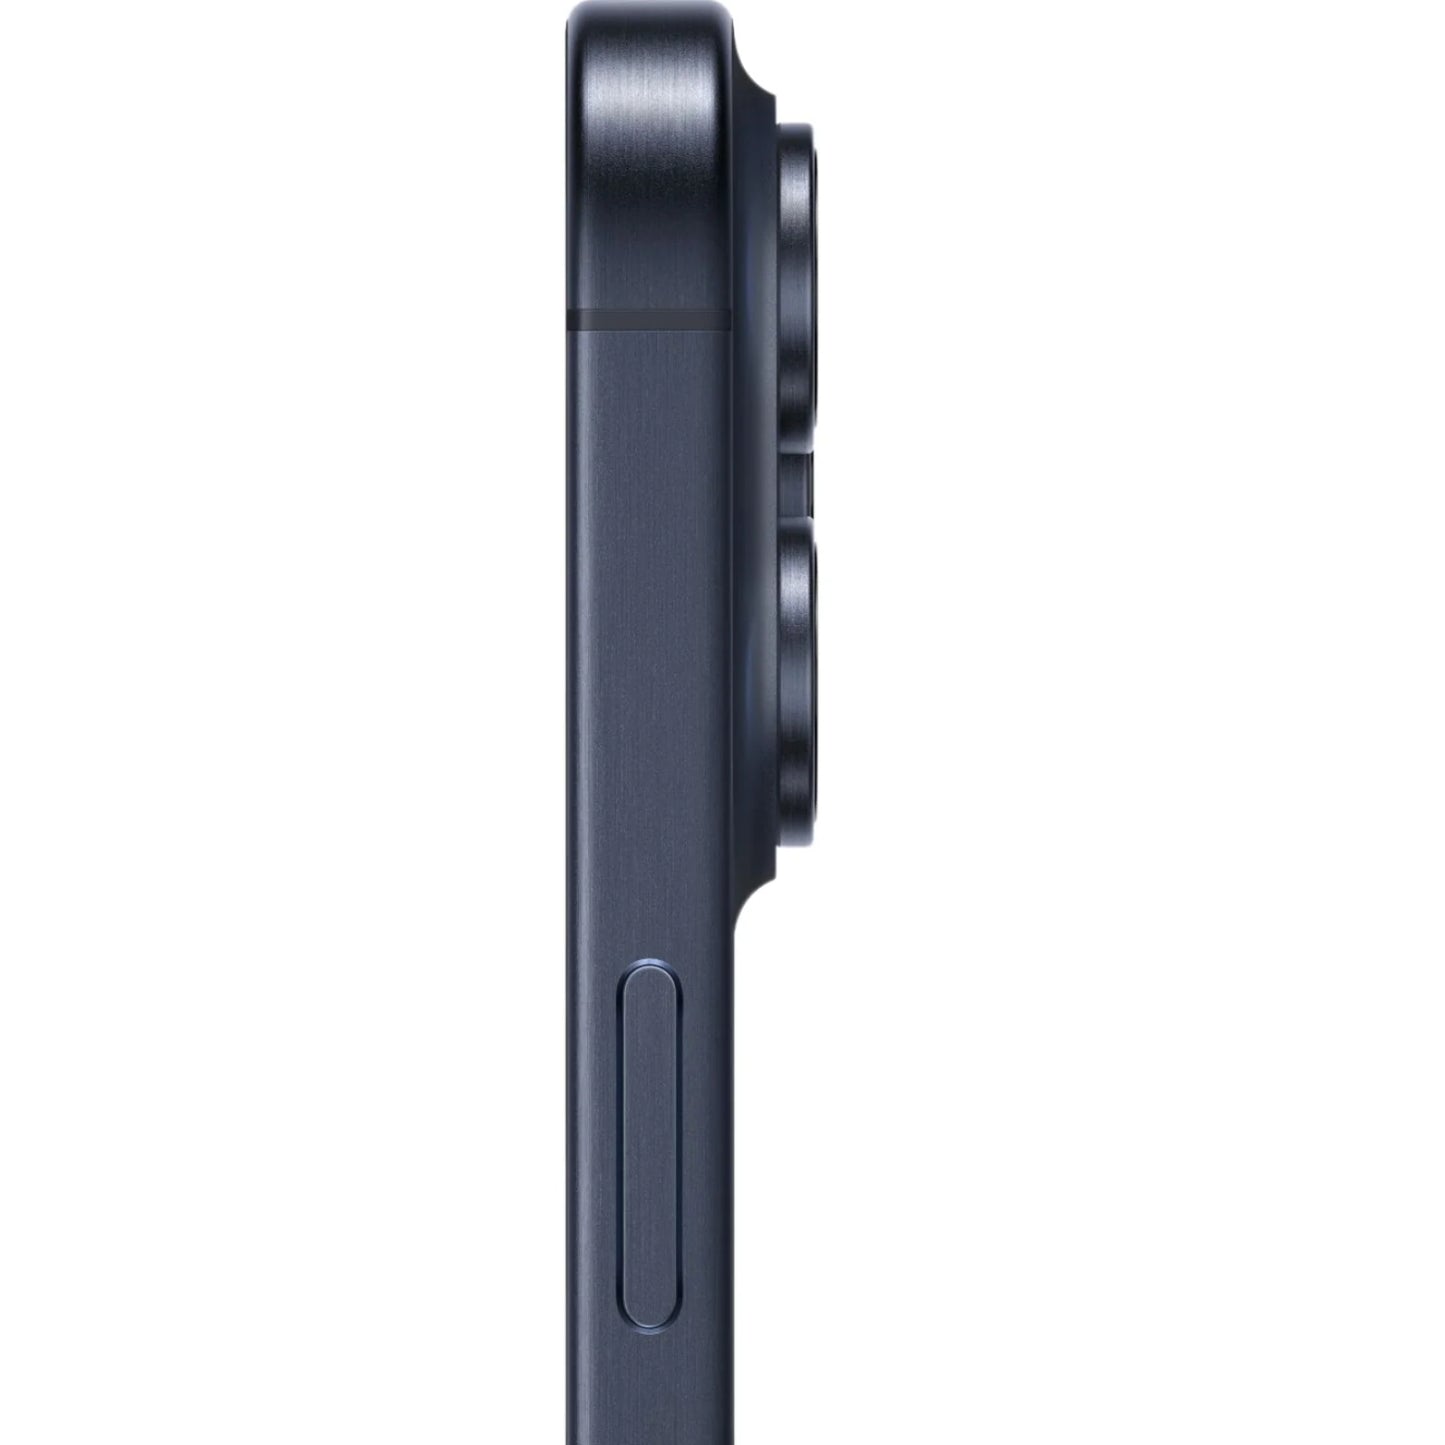 Apple iPhone 15 Pro Max HK (A3108) Dual SIM (nano-SIM) - MyMobile